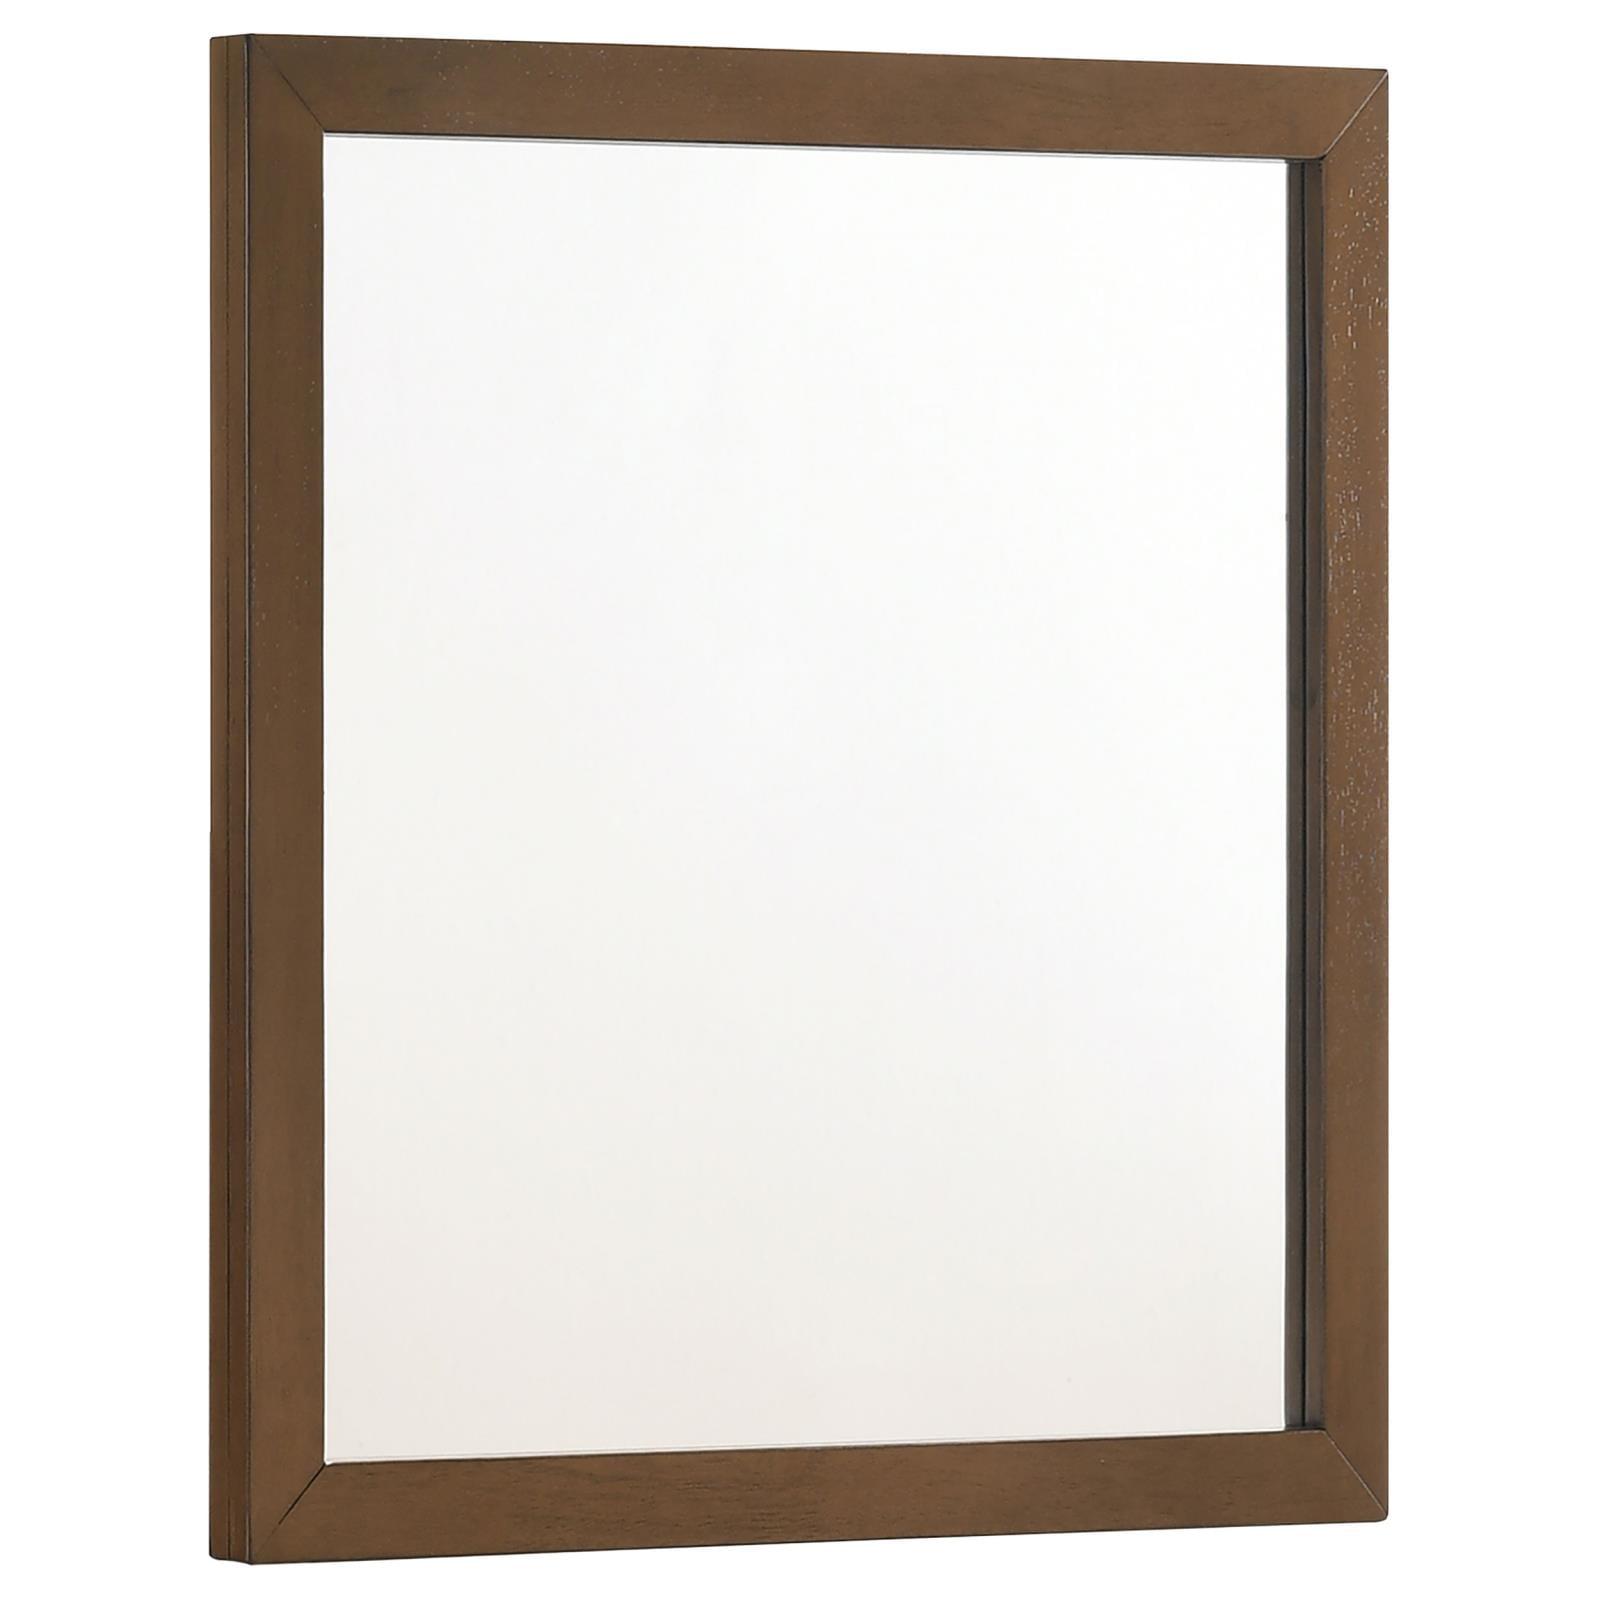 Transitional Walnut Gold Square Vanity Dresser Mirror 32.75"